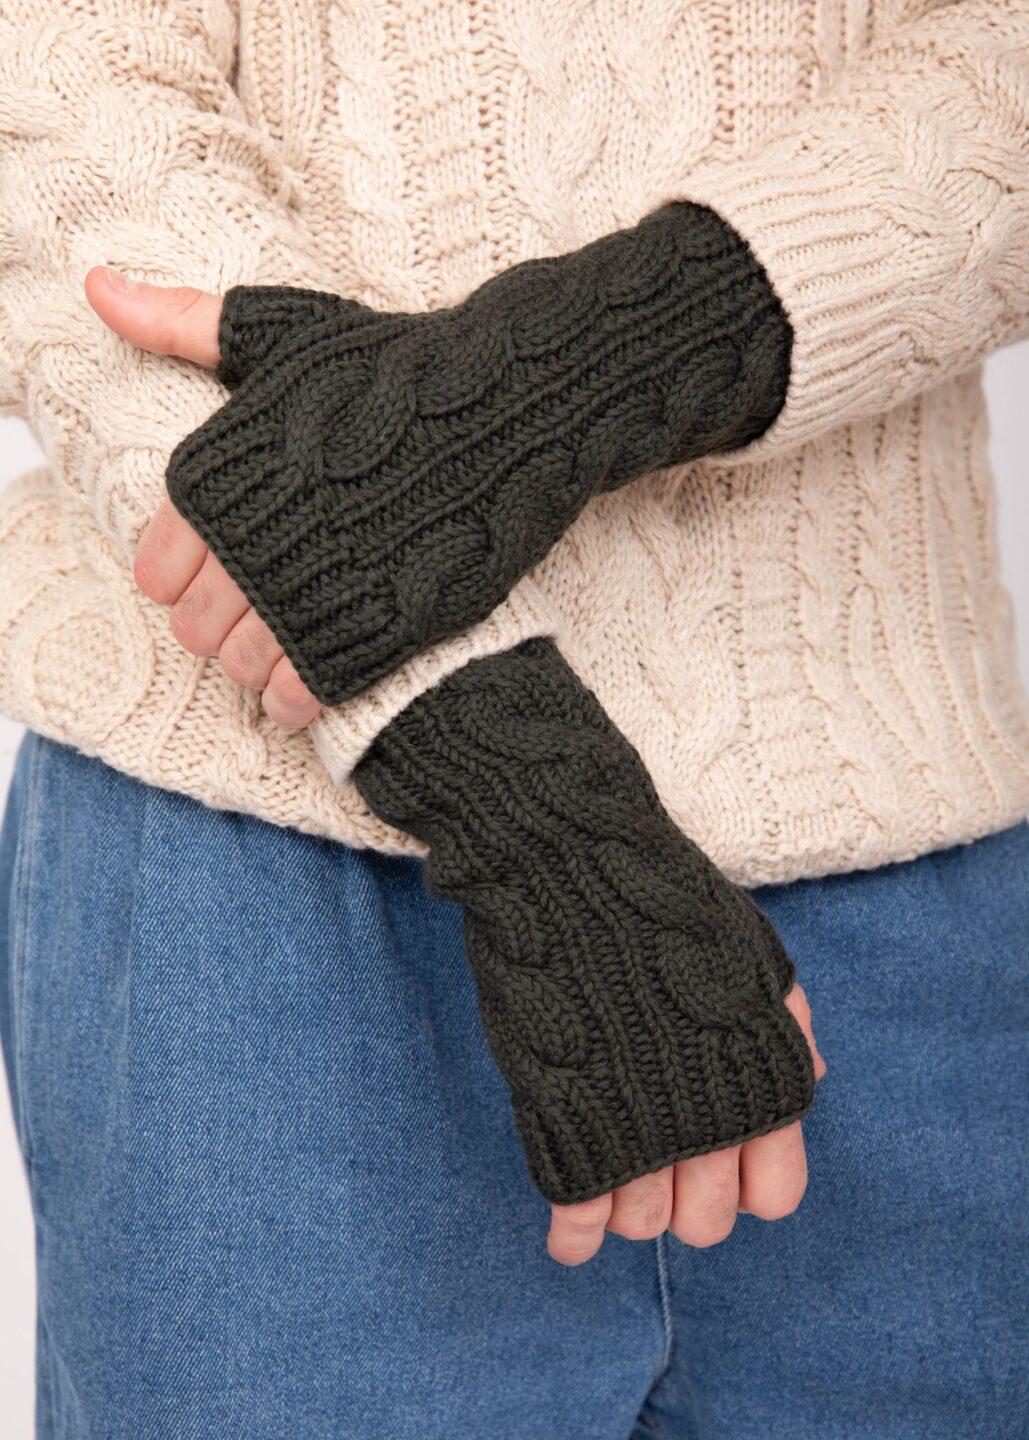 Cable Knitted Fingerless Gloves for Men 100% Merino Wool – Camo